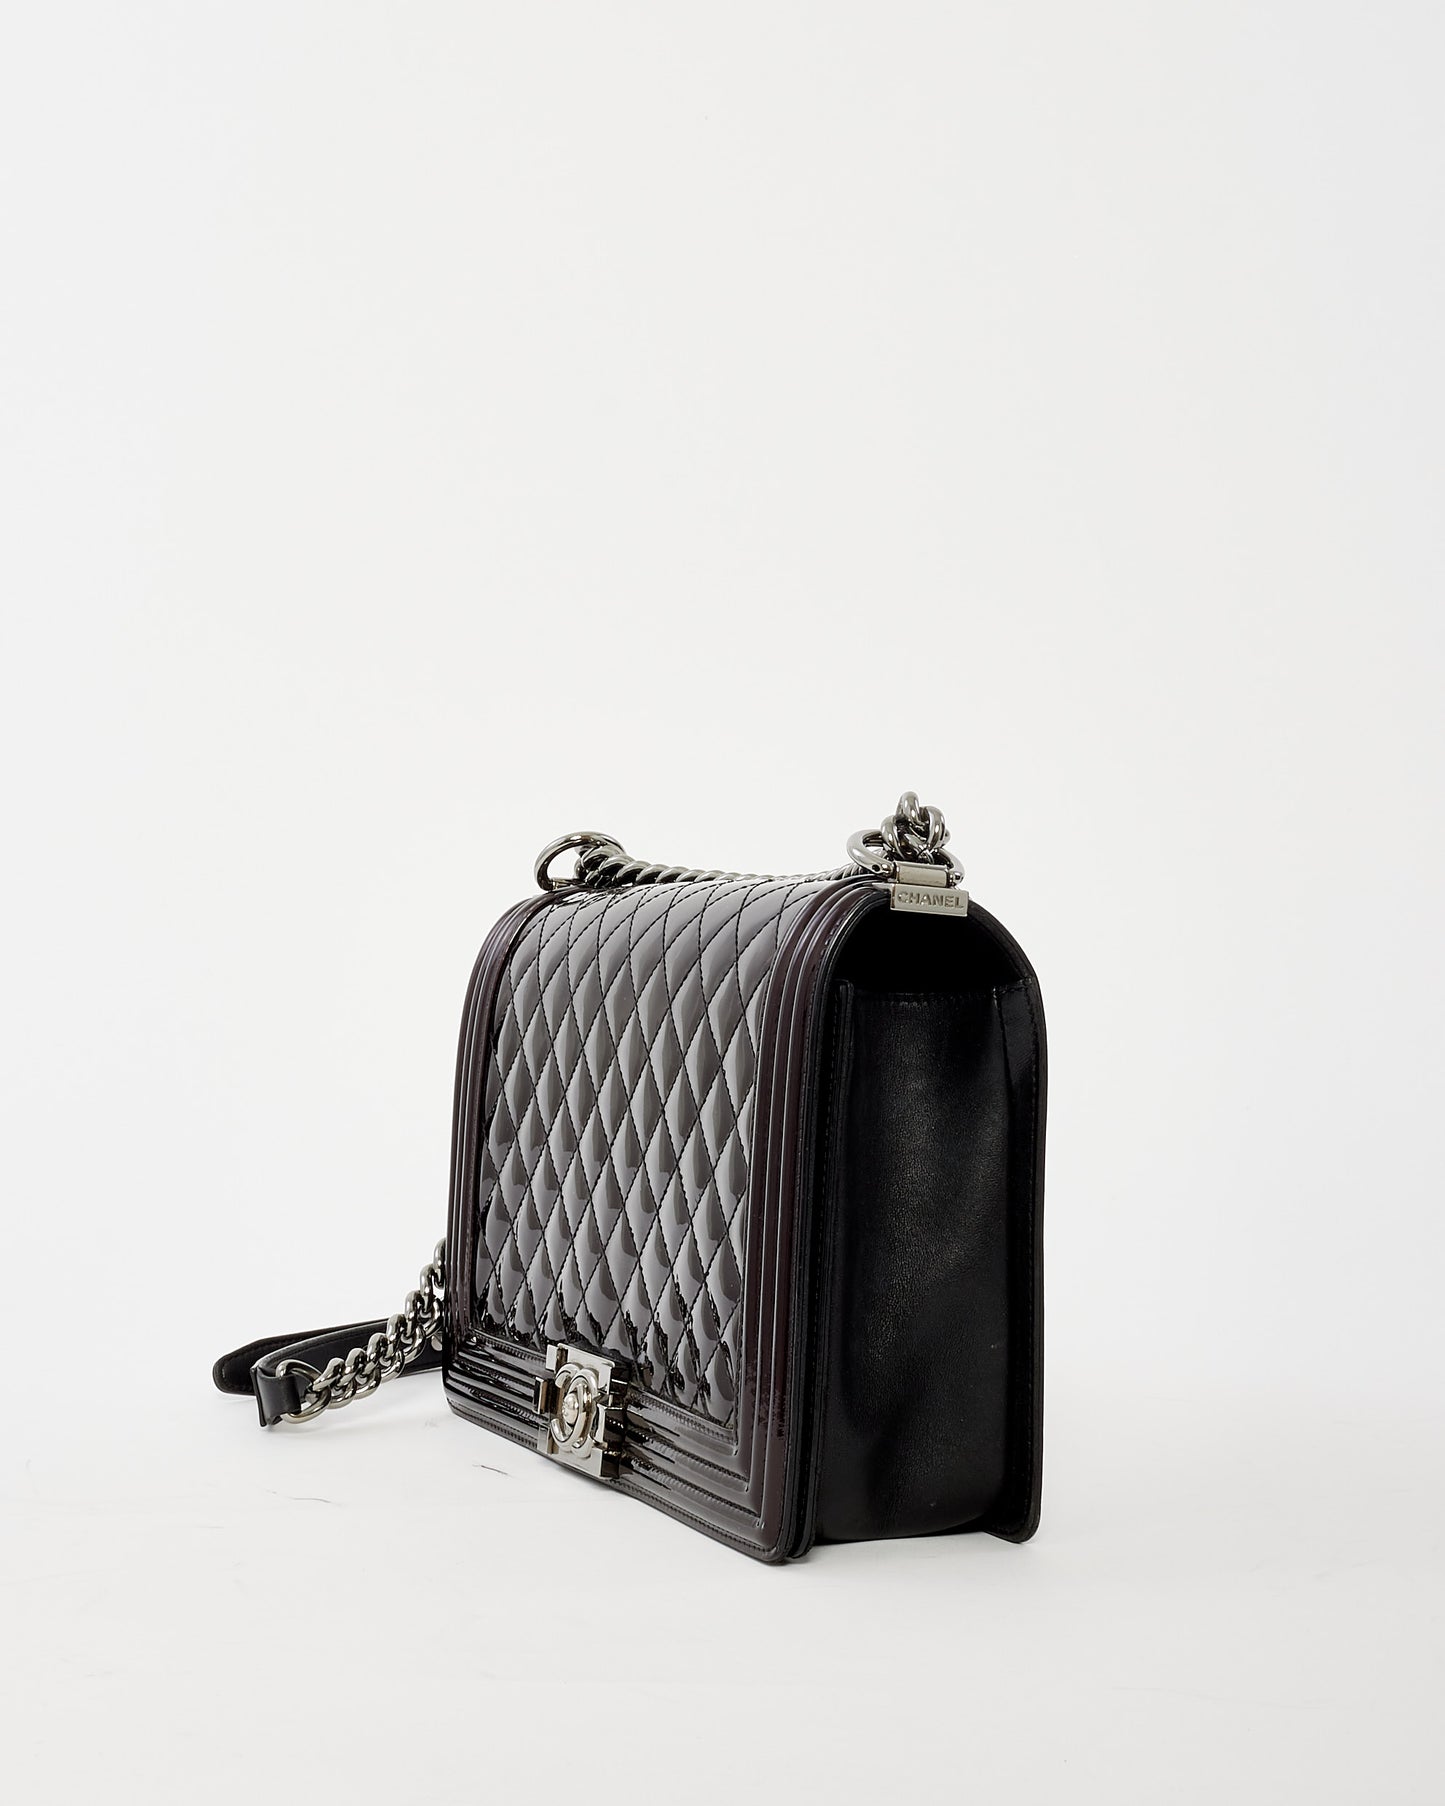 Chanel Purple Iridescent Patent Leather Medium Boy Bag